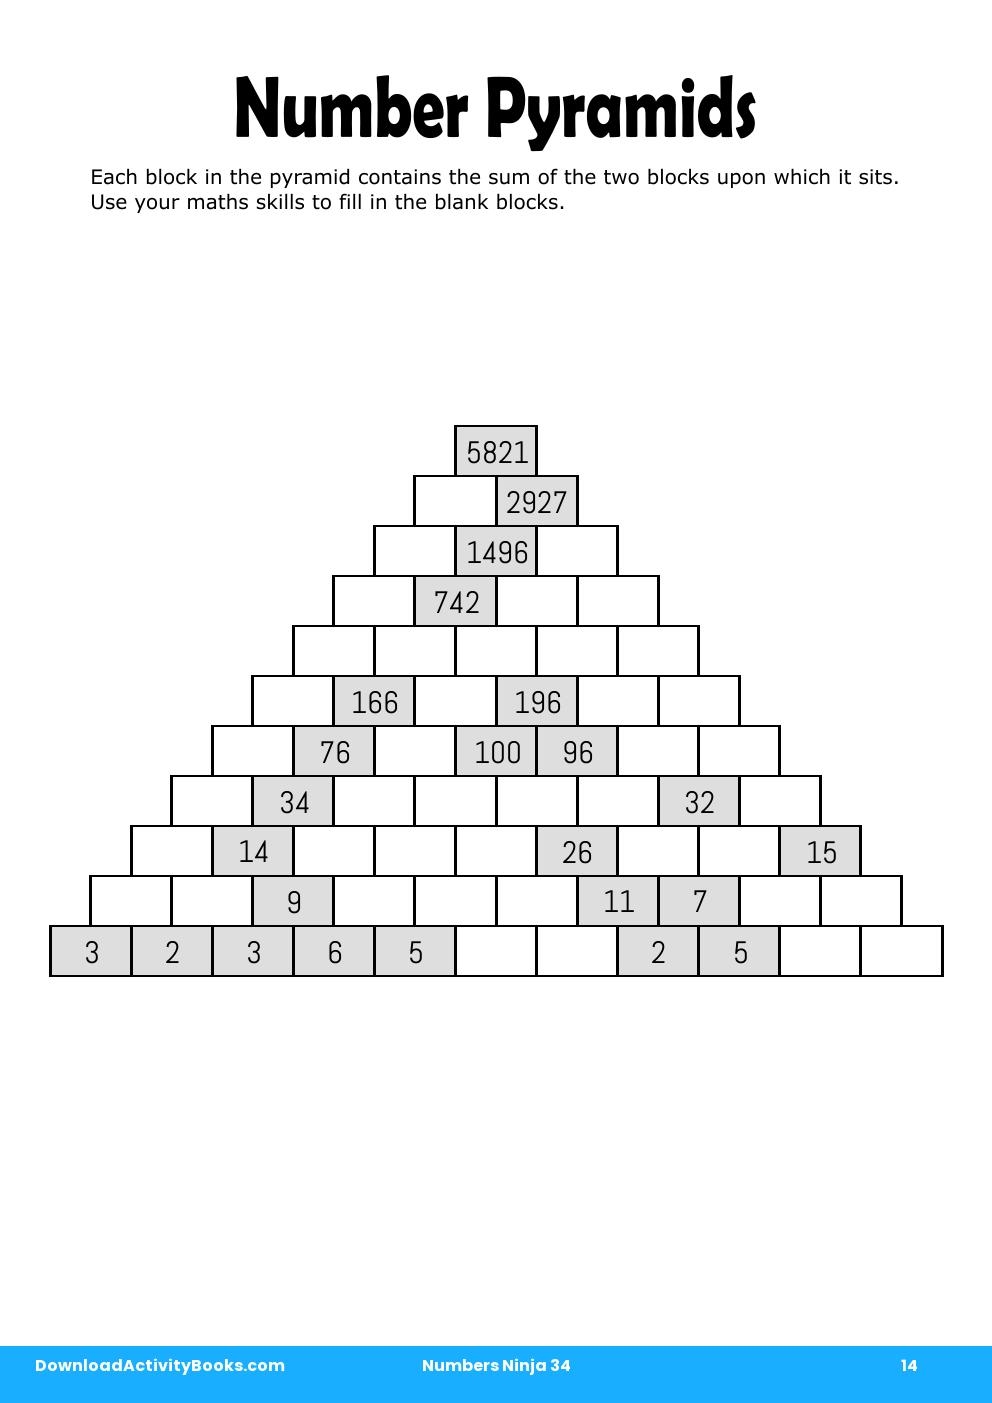 Number Pyramids in Numbers Ninja 34